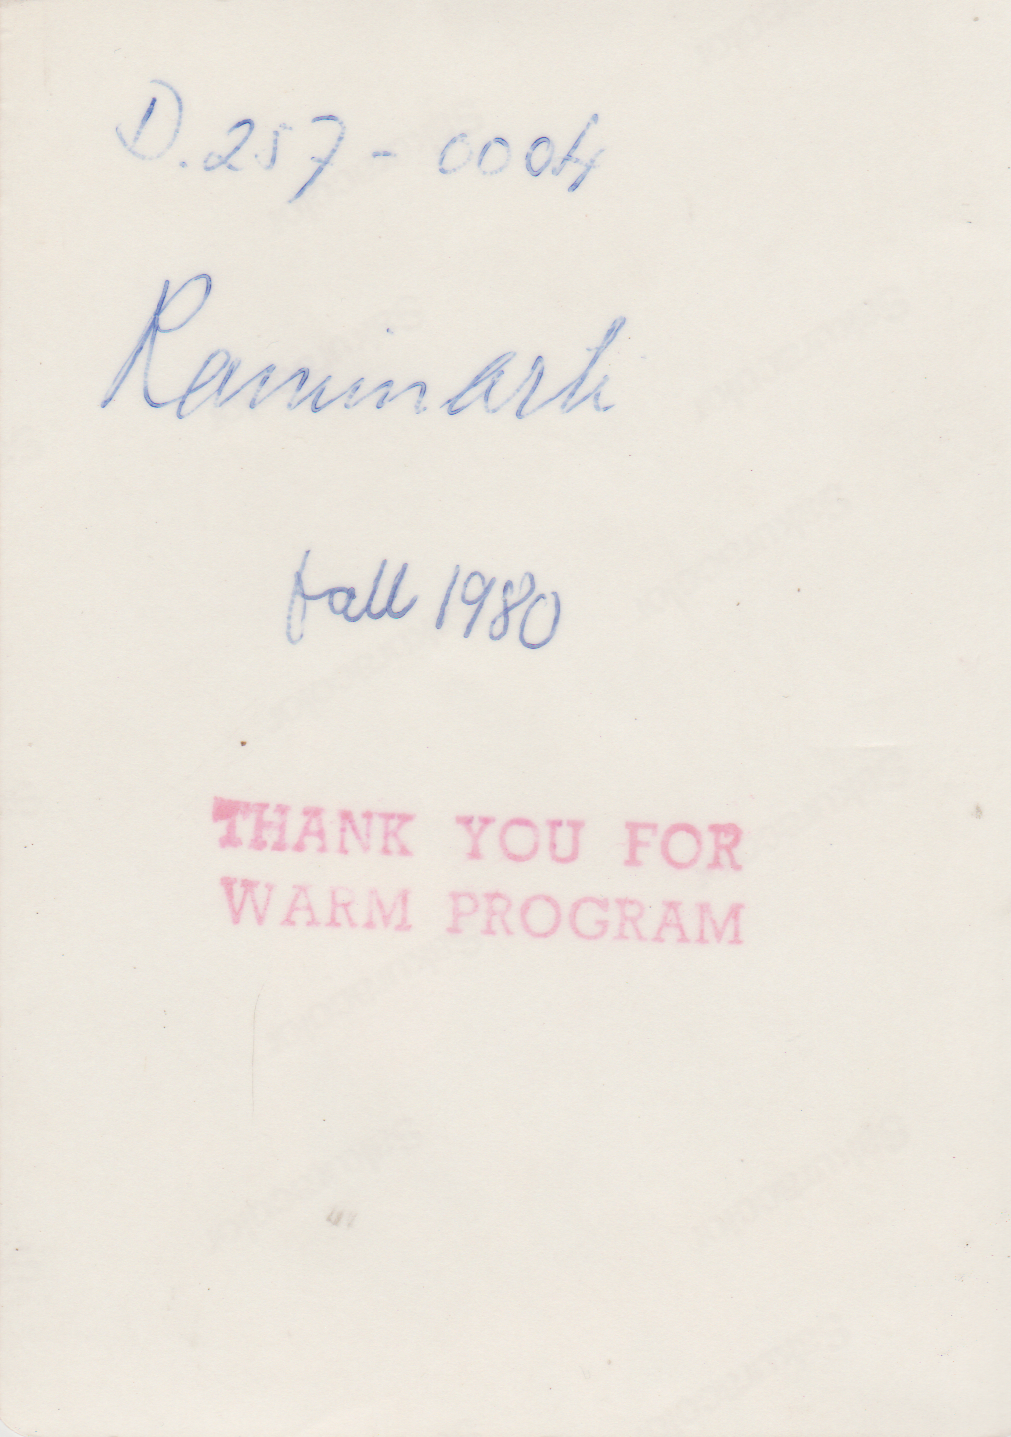 1980-09 - Raminarti, Fall of 1980, THANK YOU FOR WARM PROGRAM,D.217-0004, 2pics-2.png